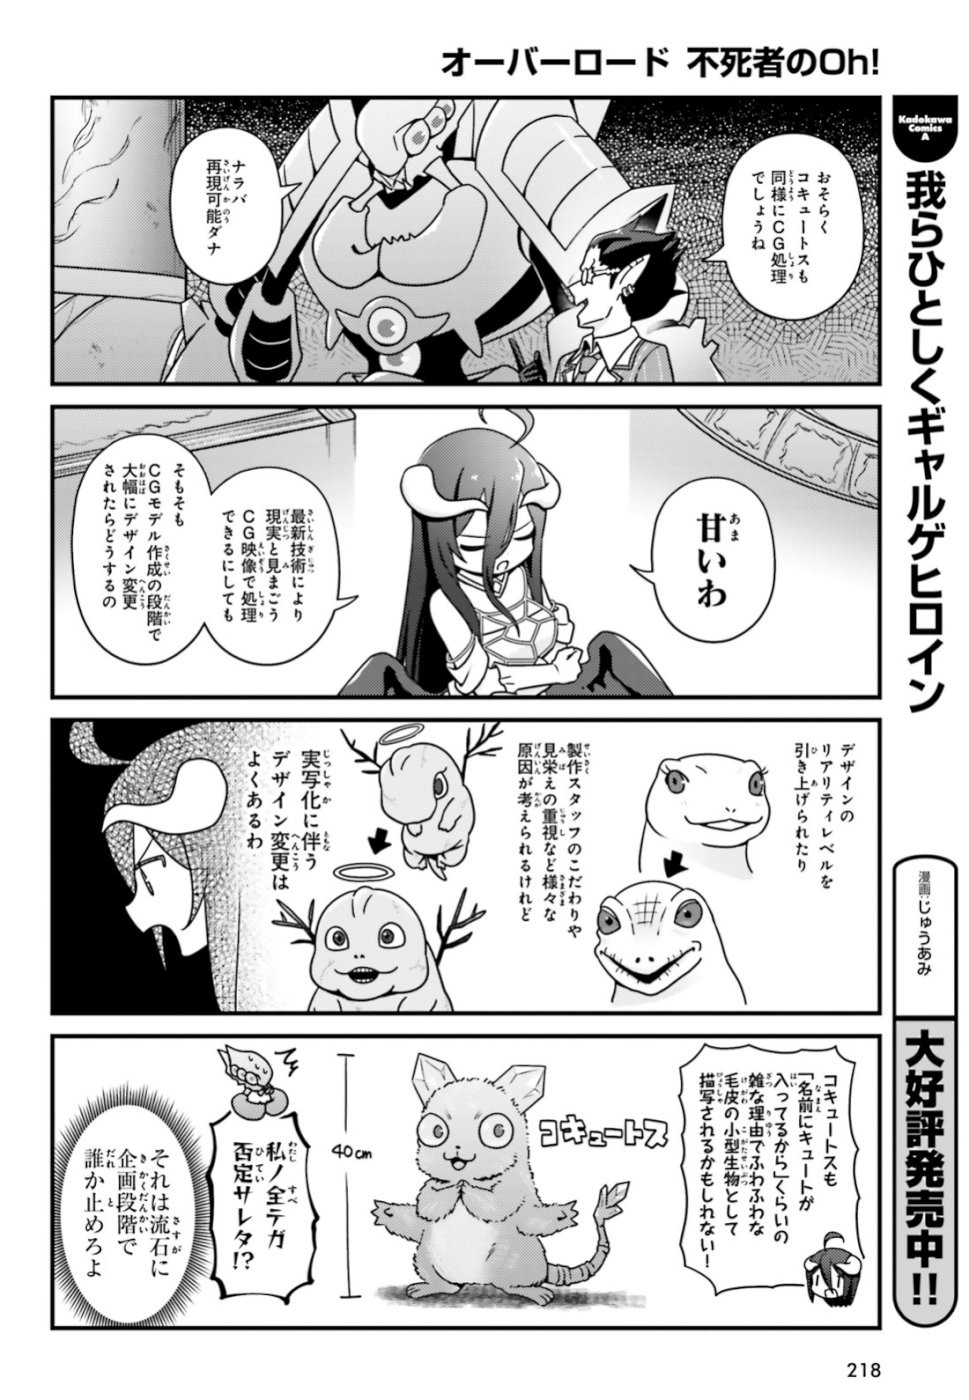 Overlord-Fushisha-no-Oh - Chapter 30 - Page 4